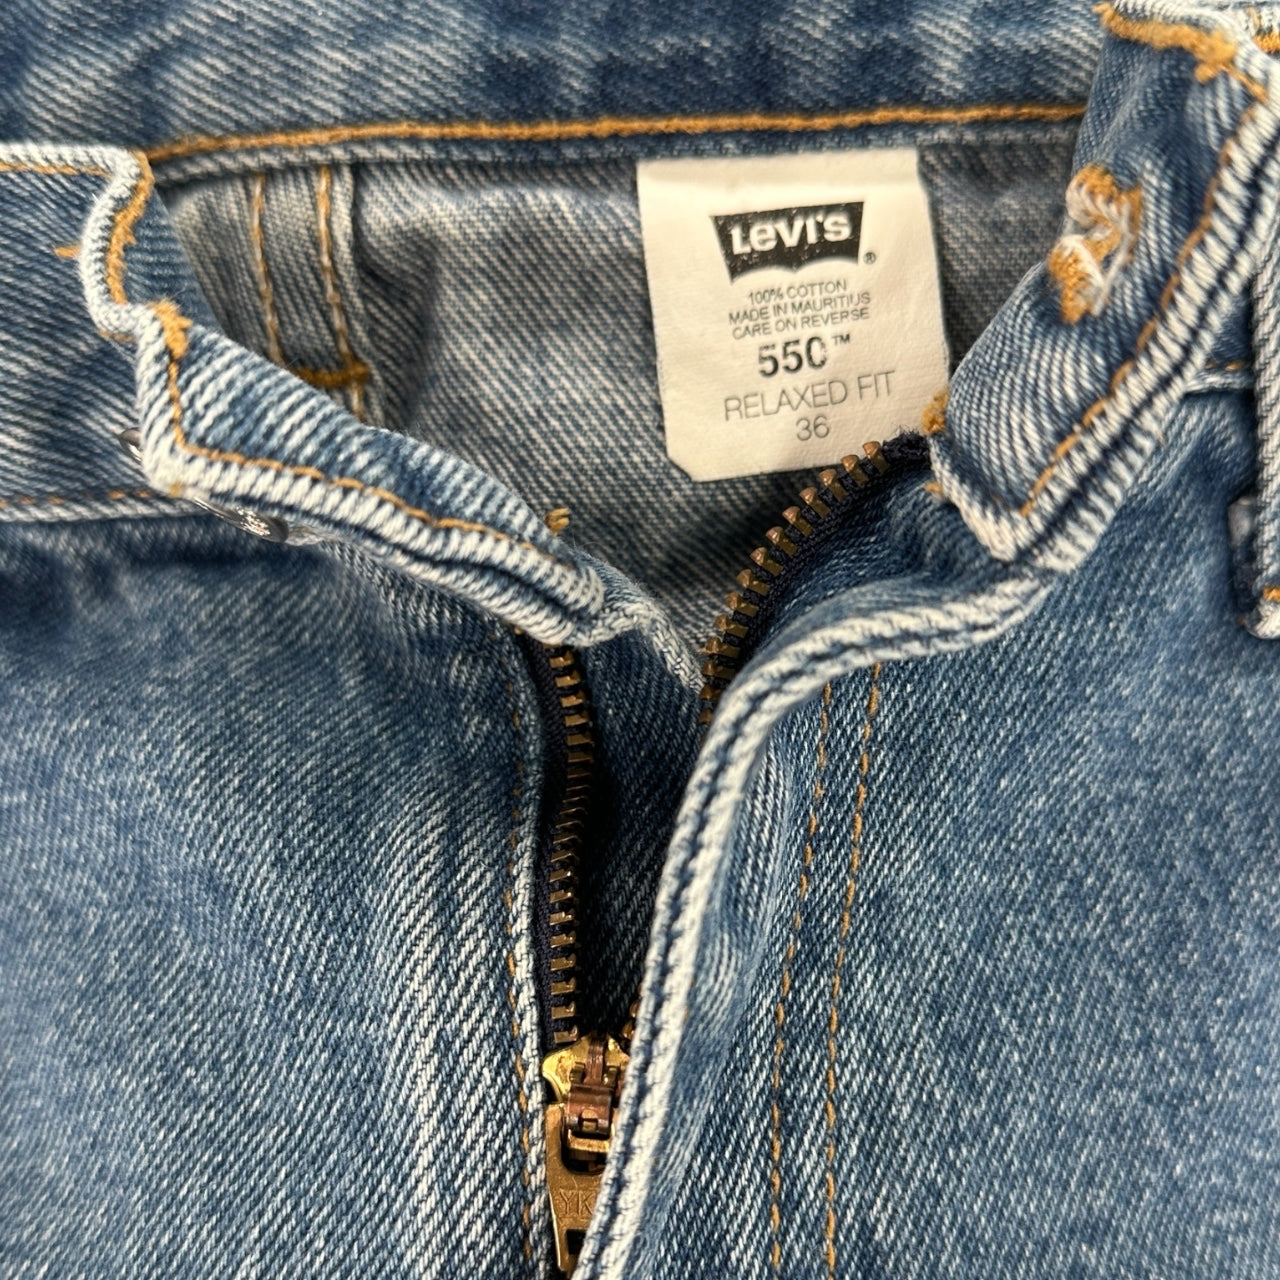 Vintage Levi's 550 Shorts - Waist 34 Great Lakes Reclaimed Denim